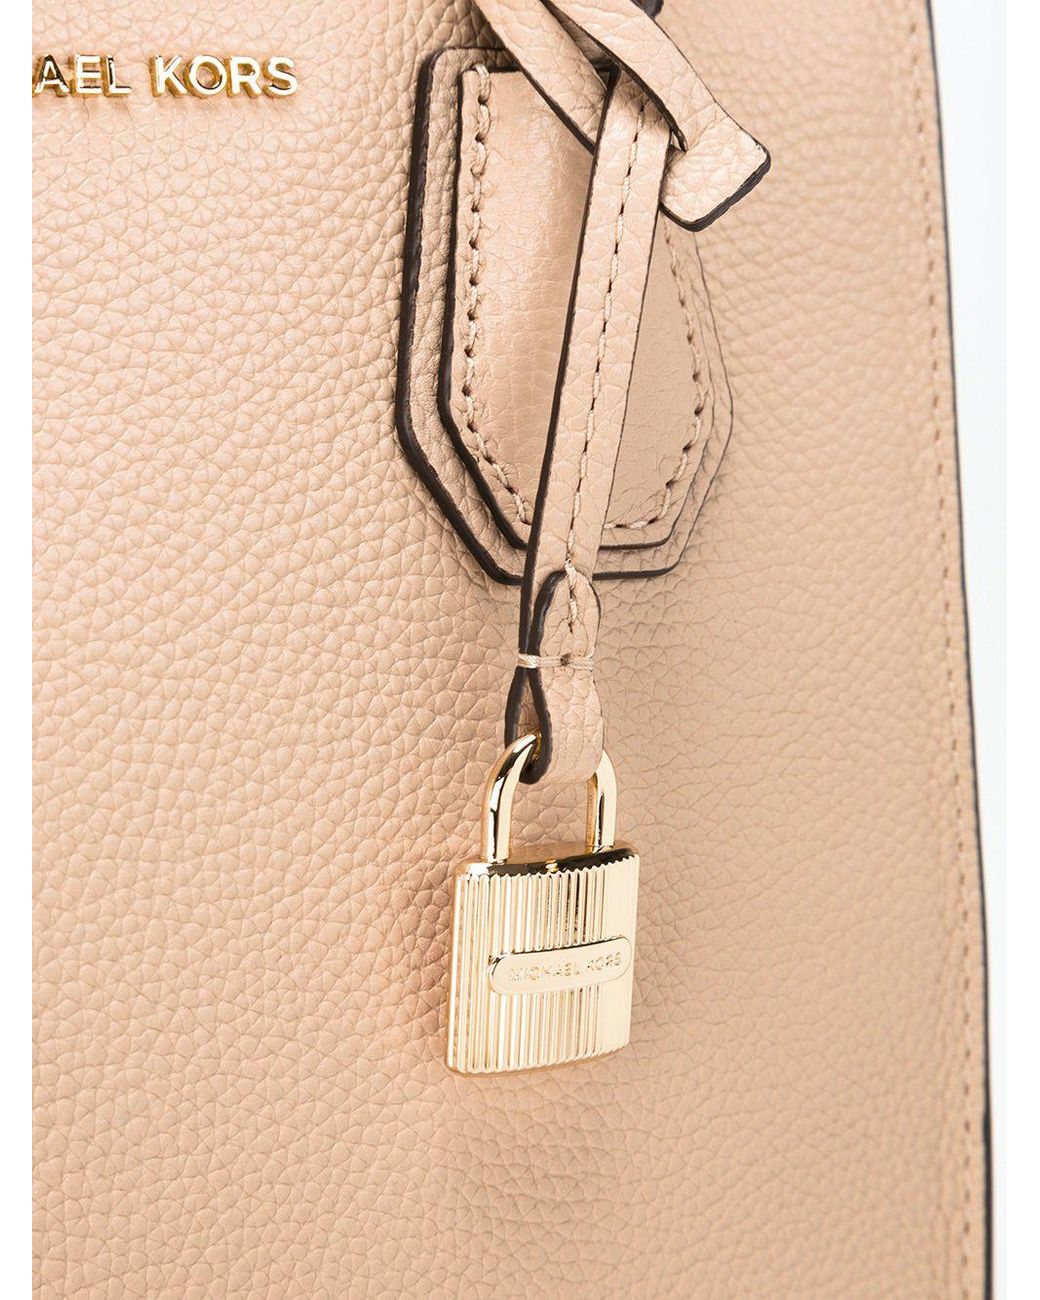 michael kors handbag lock and key